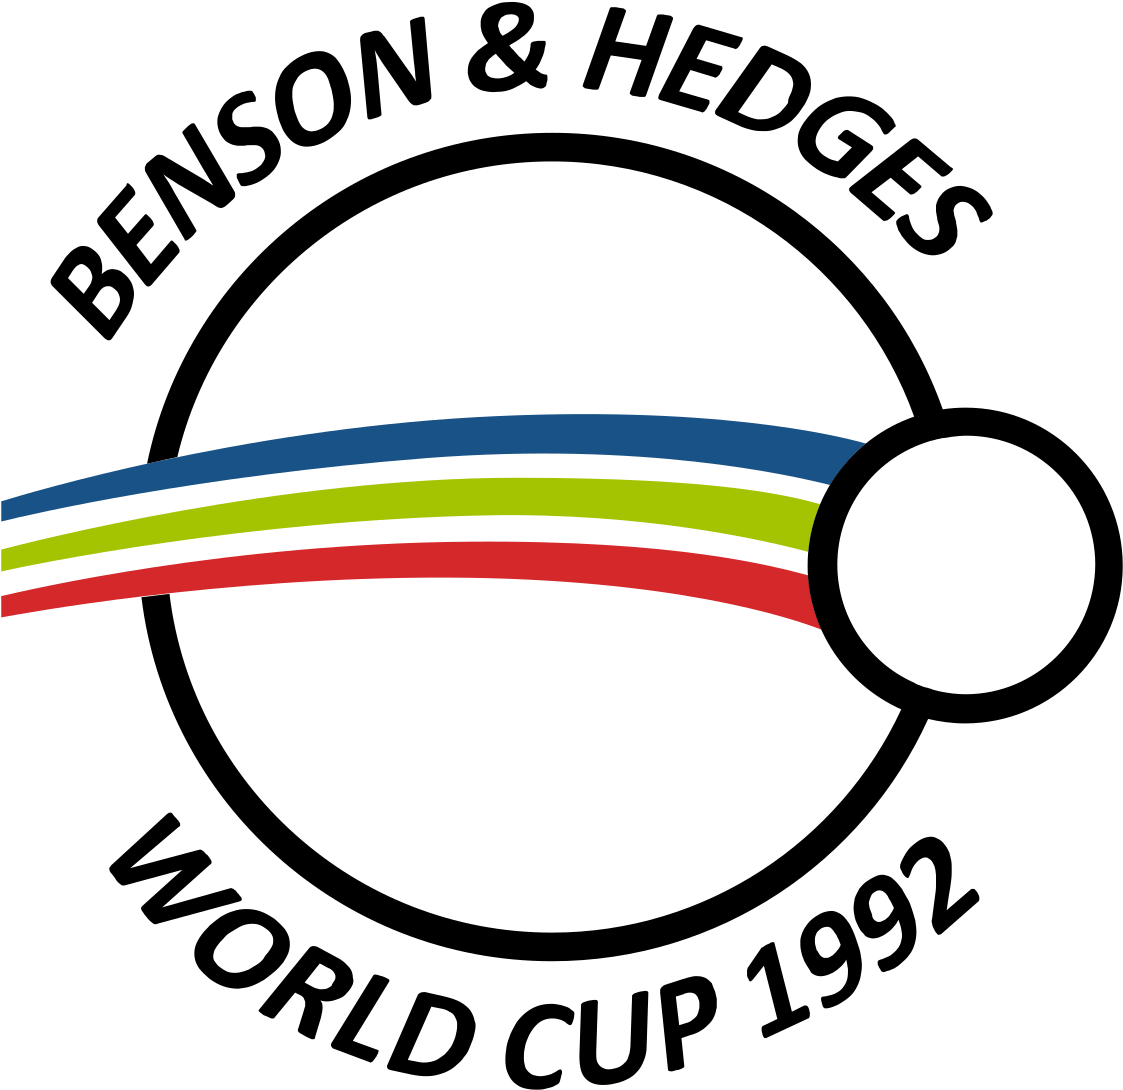 1992 Cricket World Cup Logo (1200x1161)